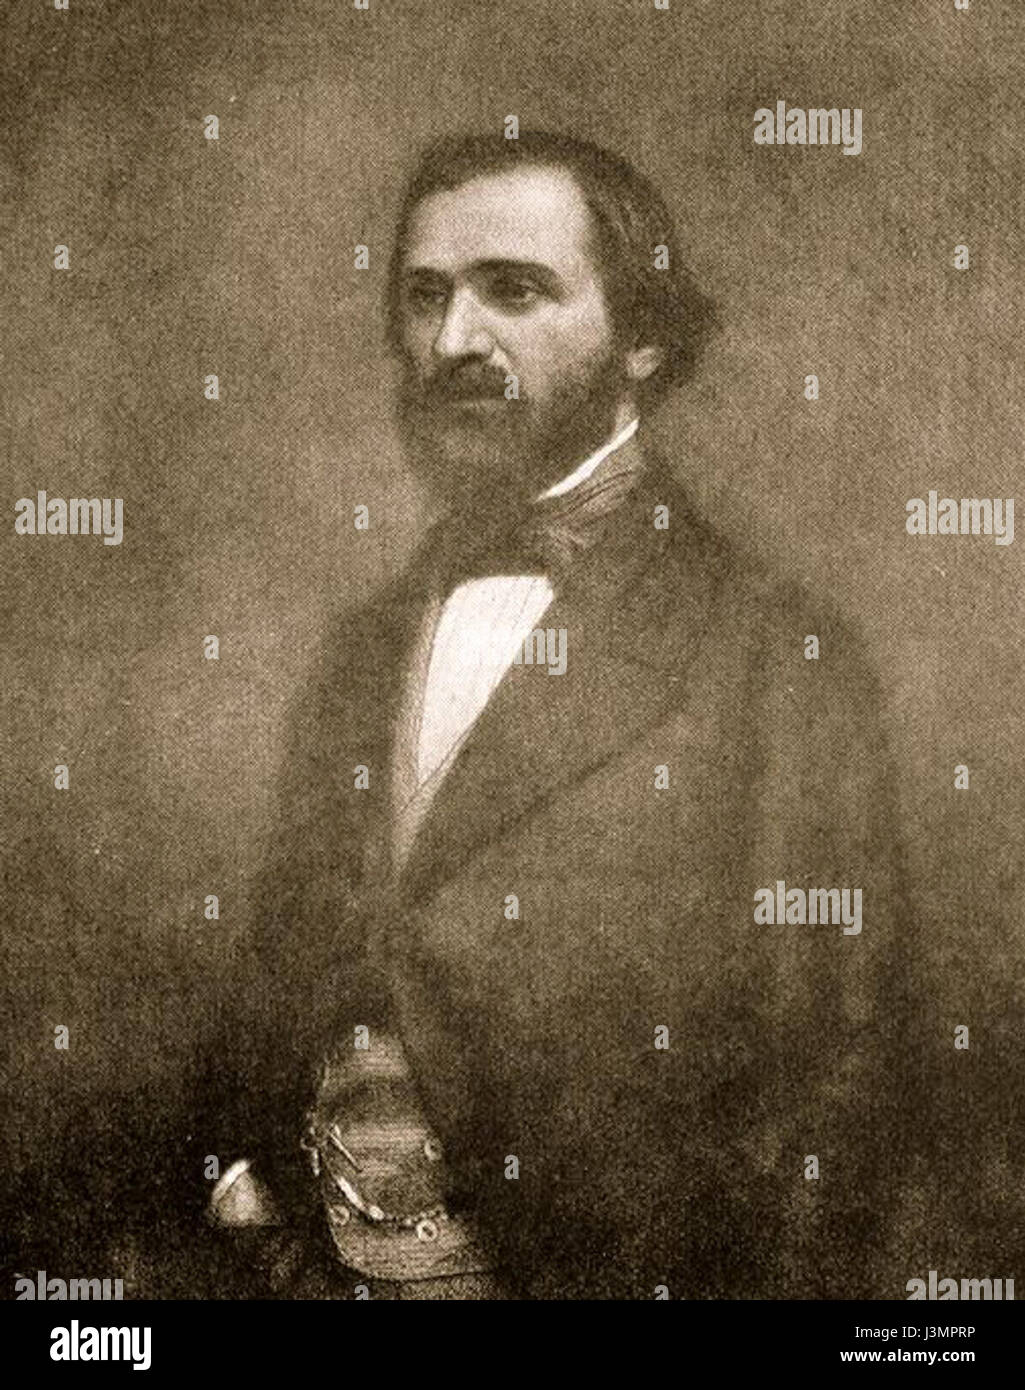 Giuseppe Verdi portrait Stock Photo